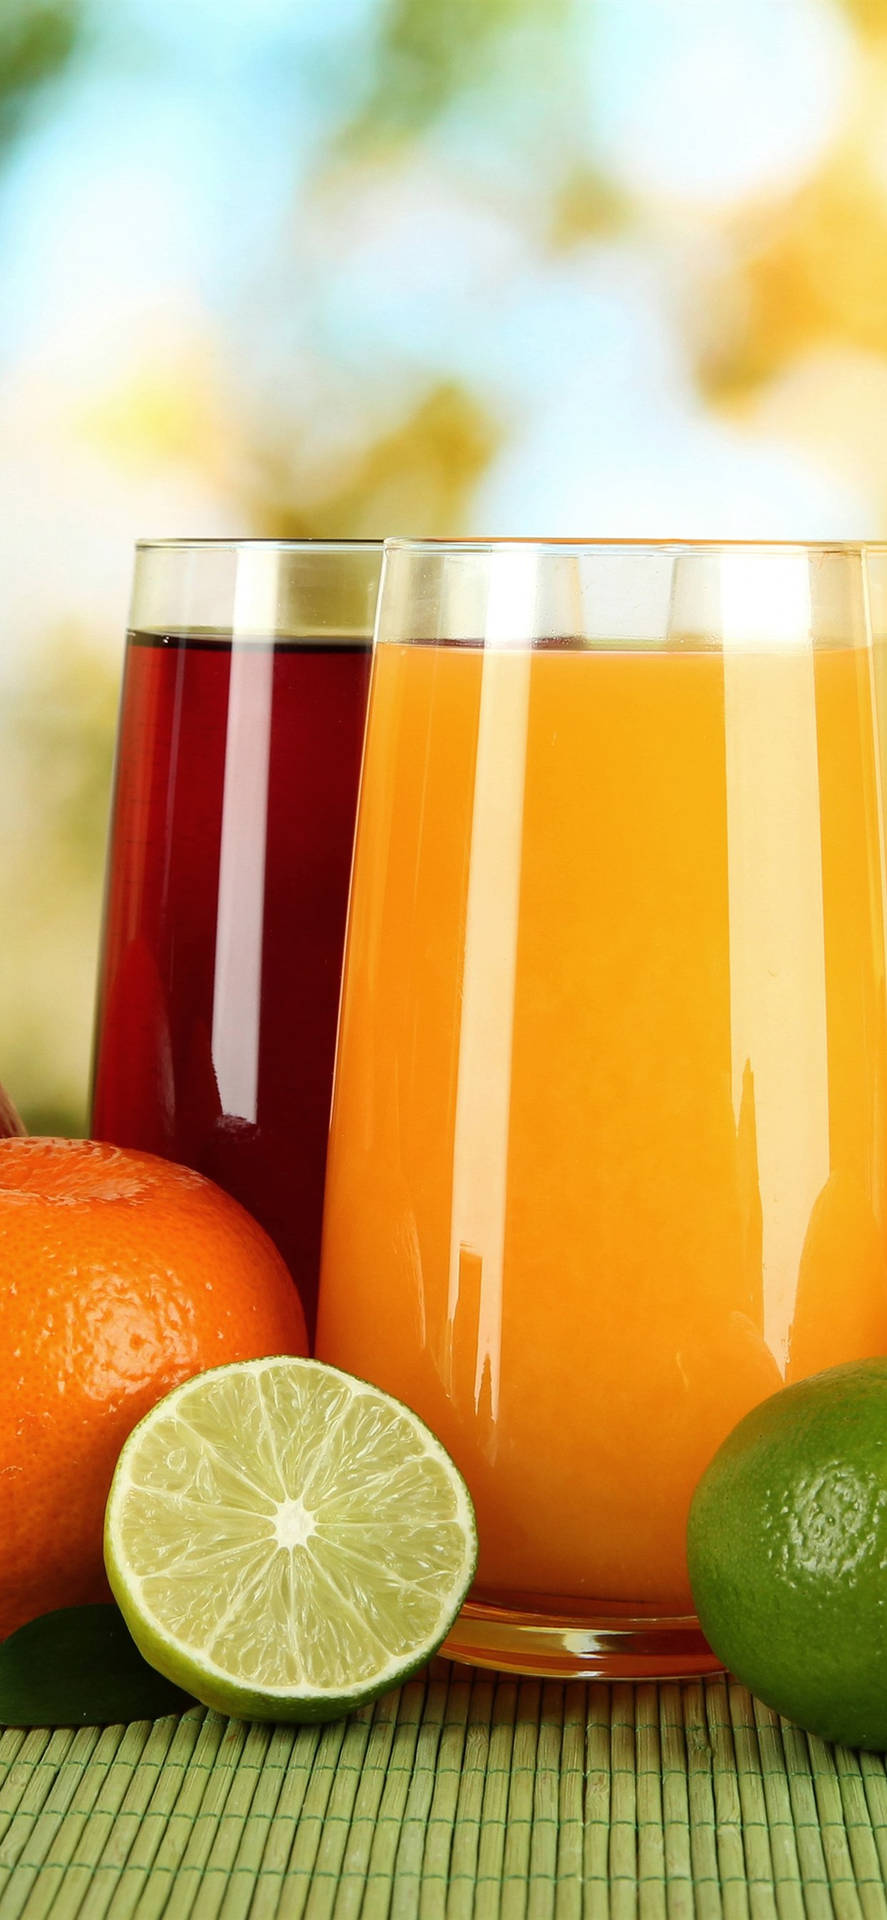 Orange And Lime Fruit Juices Background